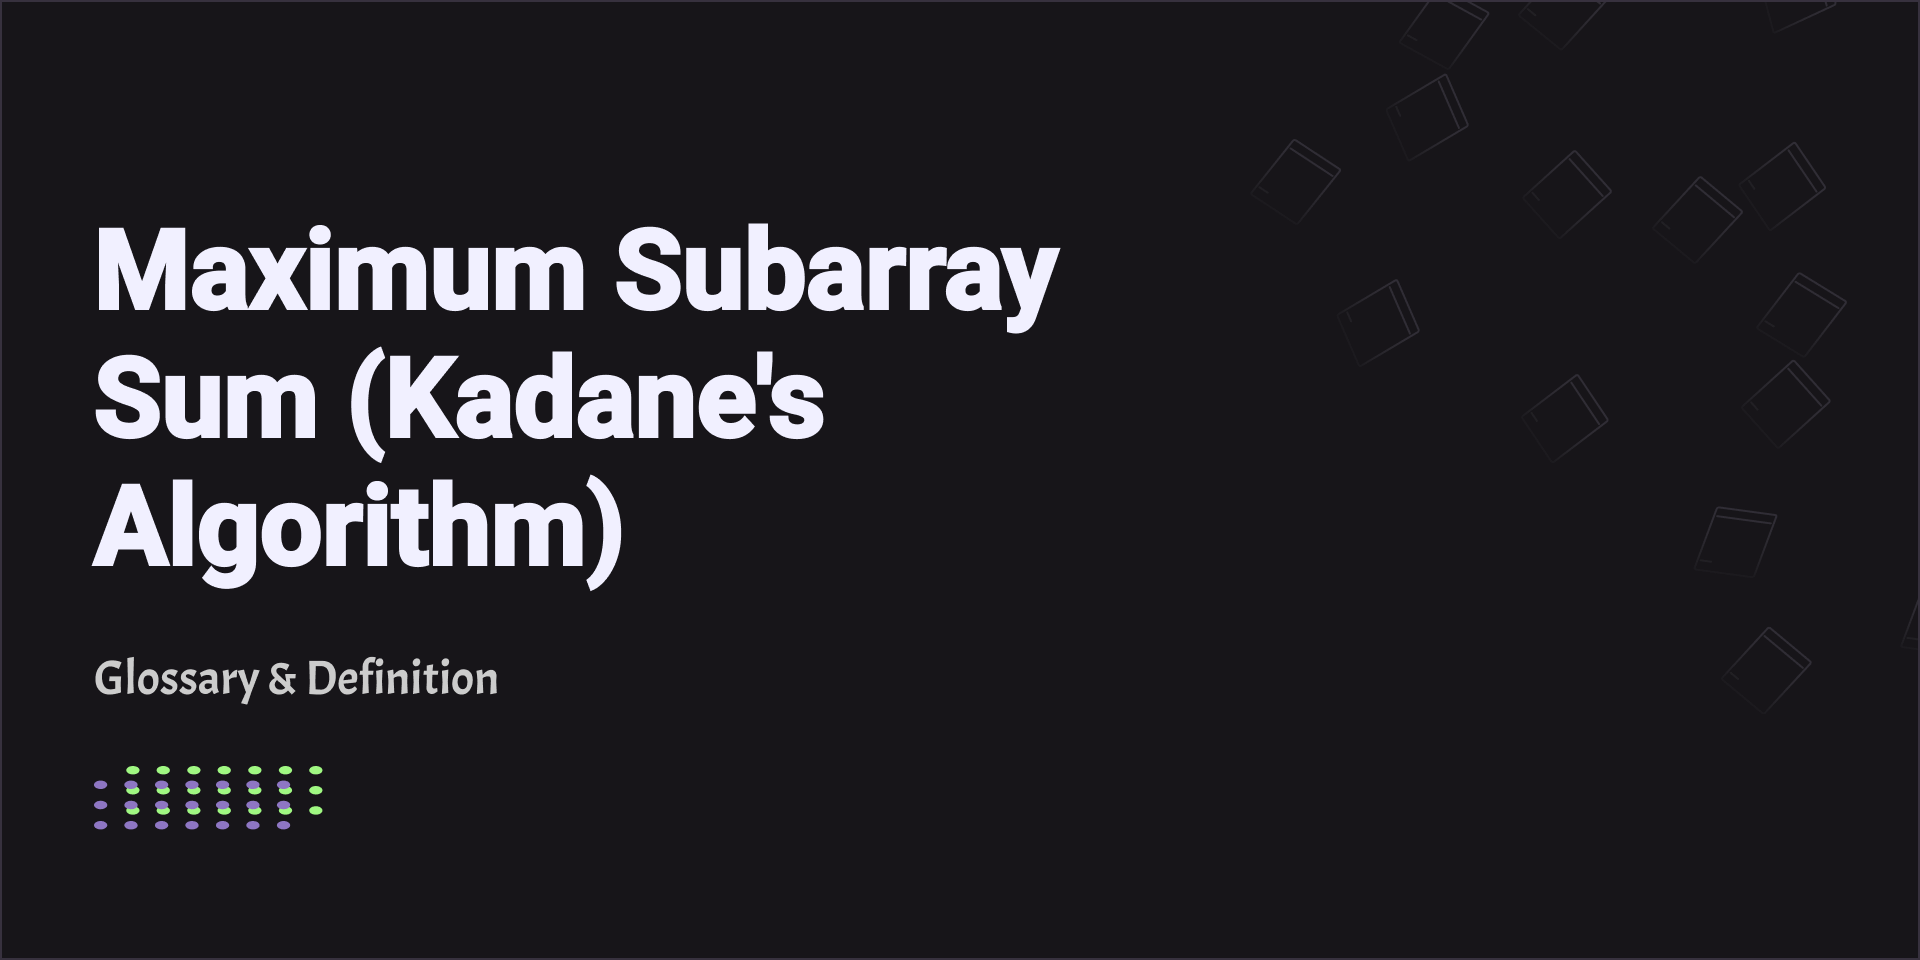 Maximum Subarray Sum (Kadane's Algorithm)